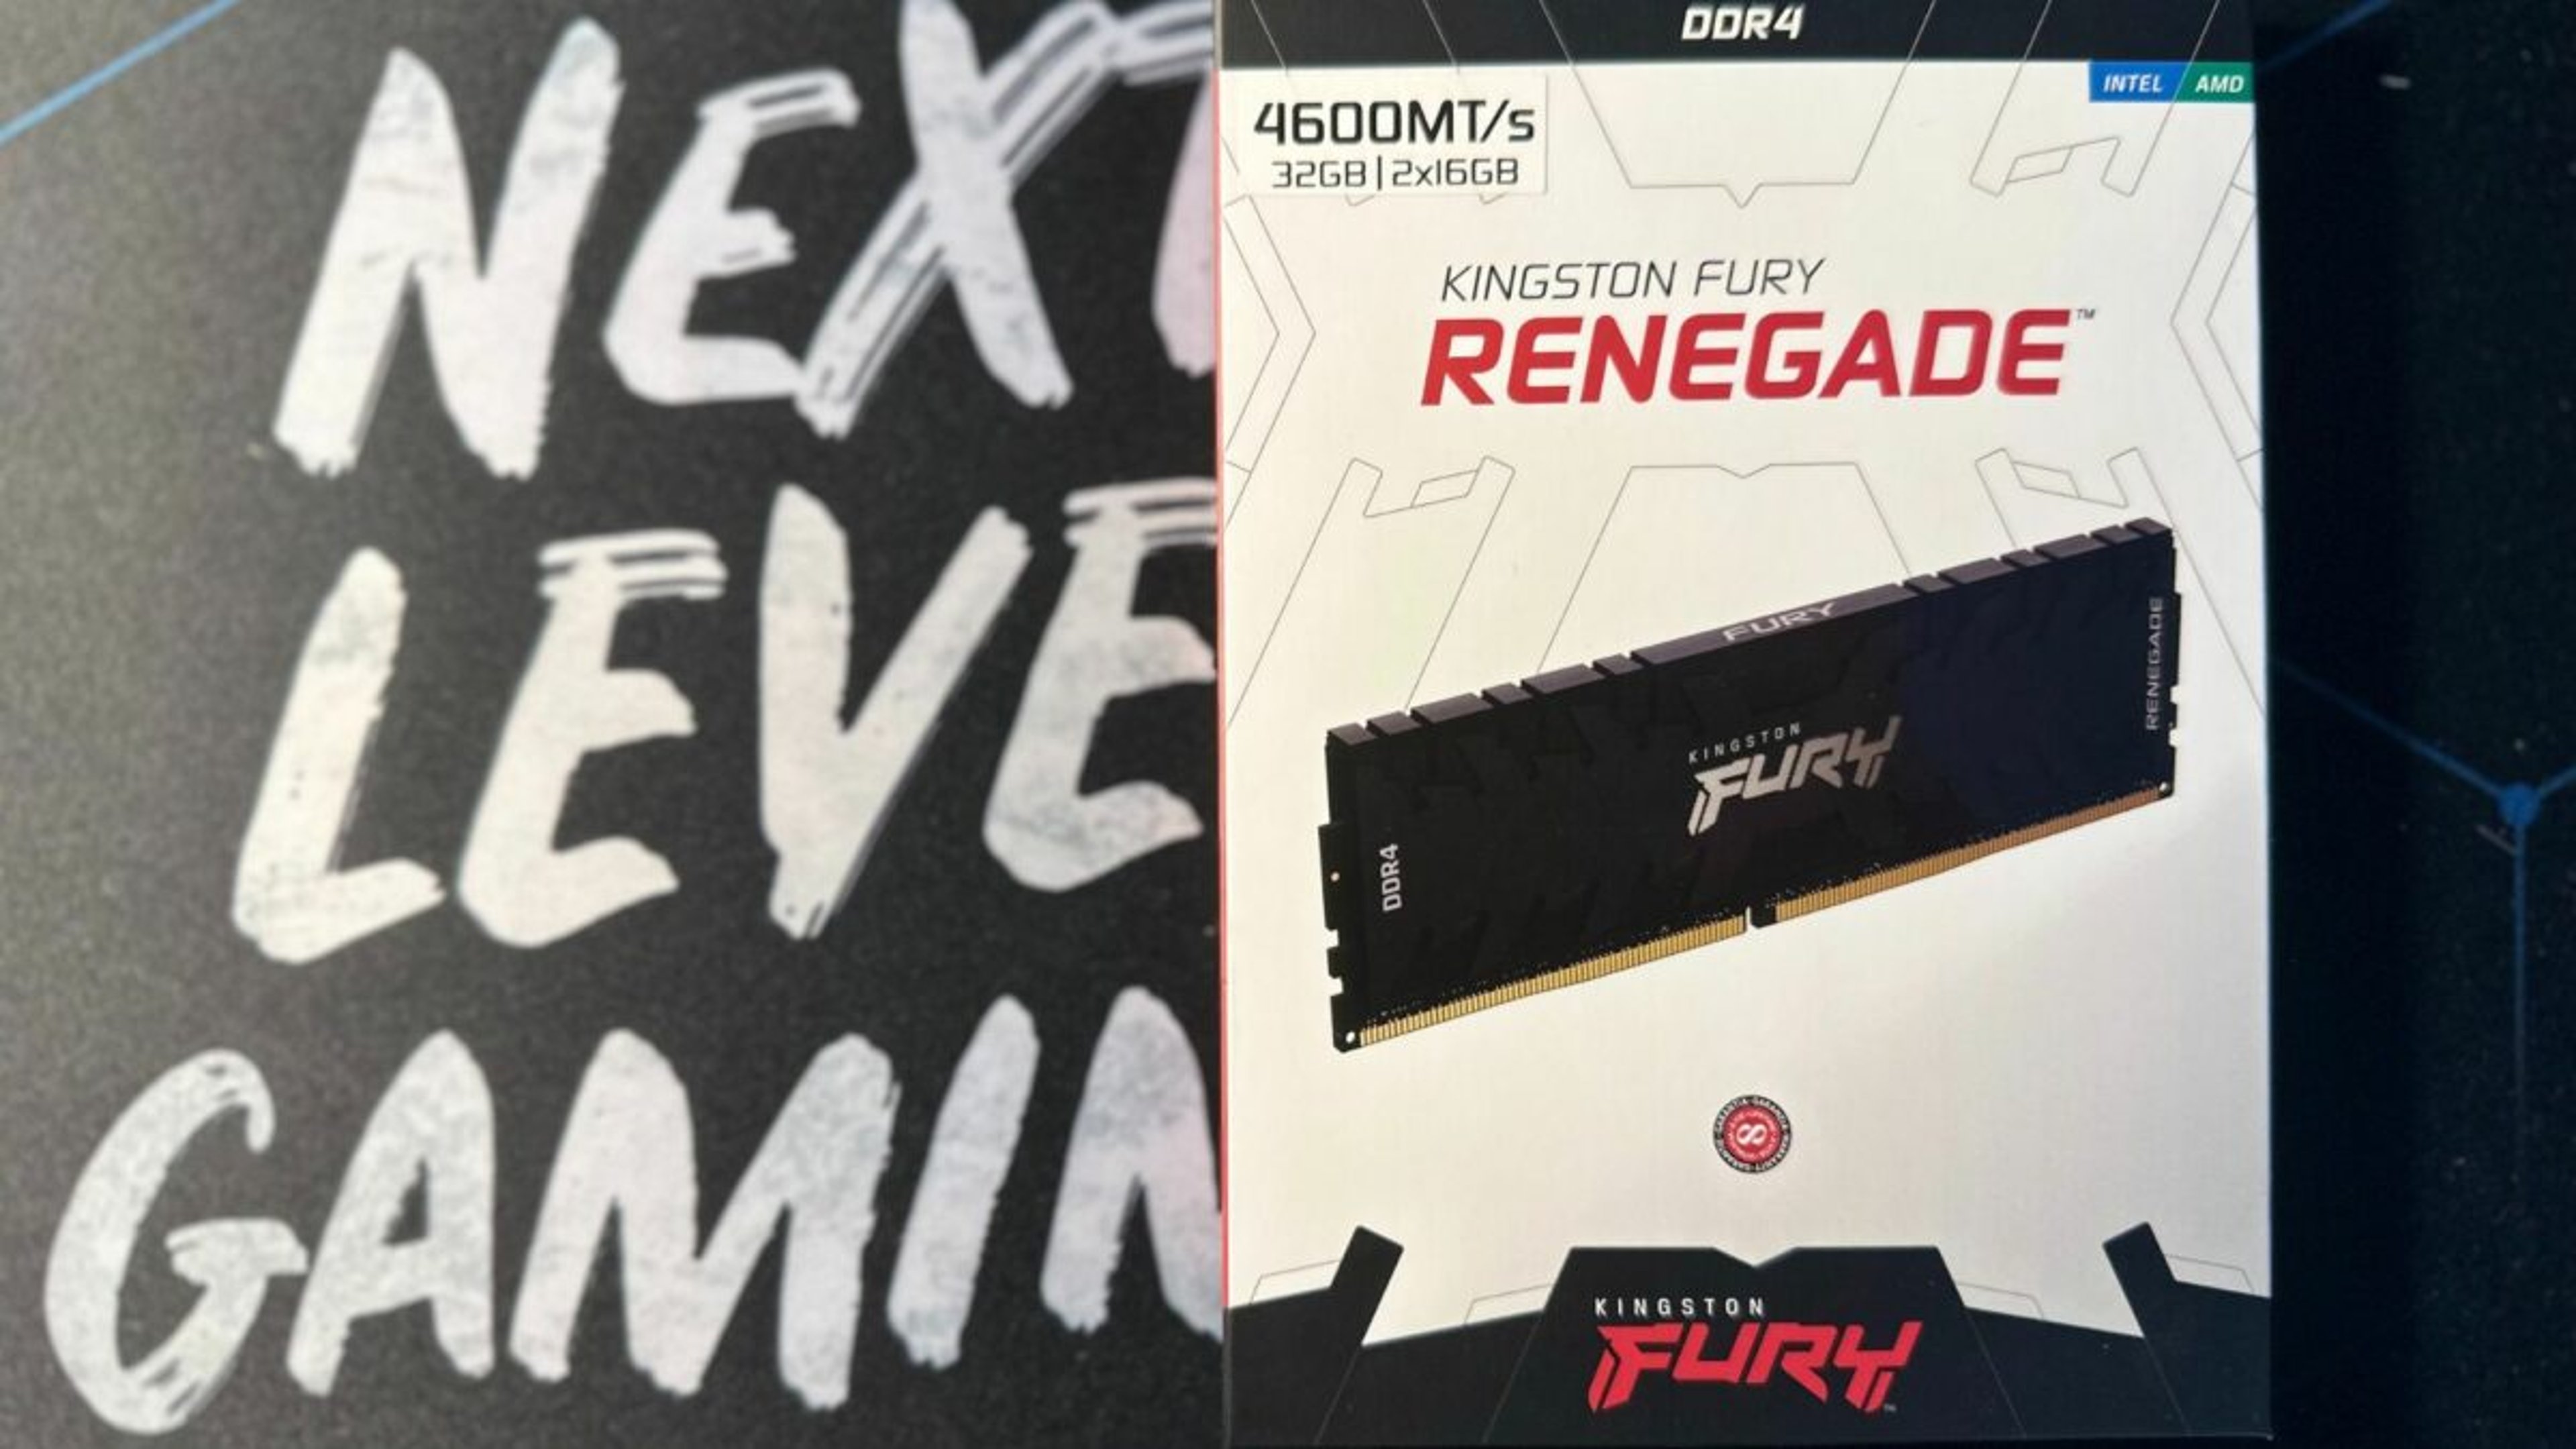 FURY Renegade DDR4, Recensione – Ram da 4600MT/s